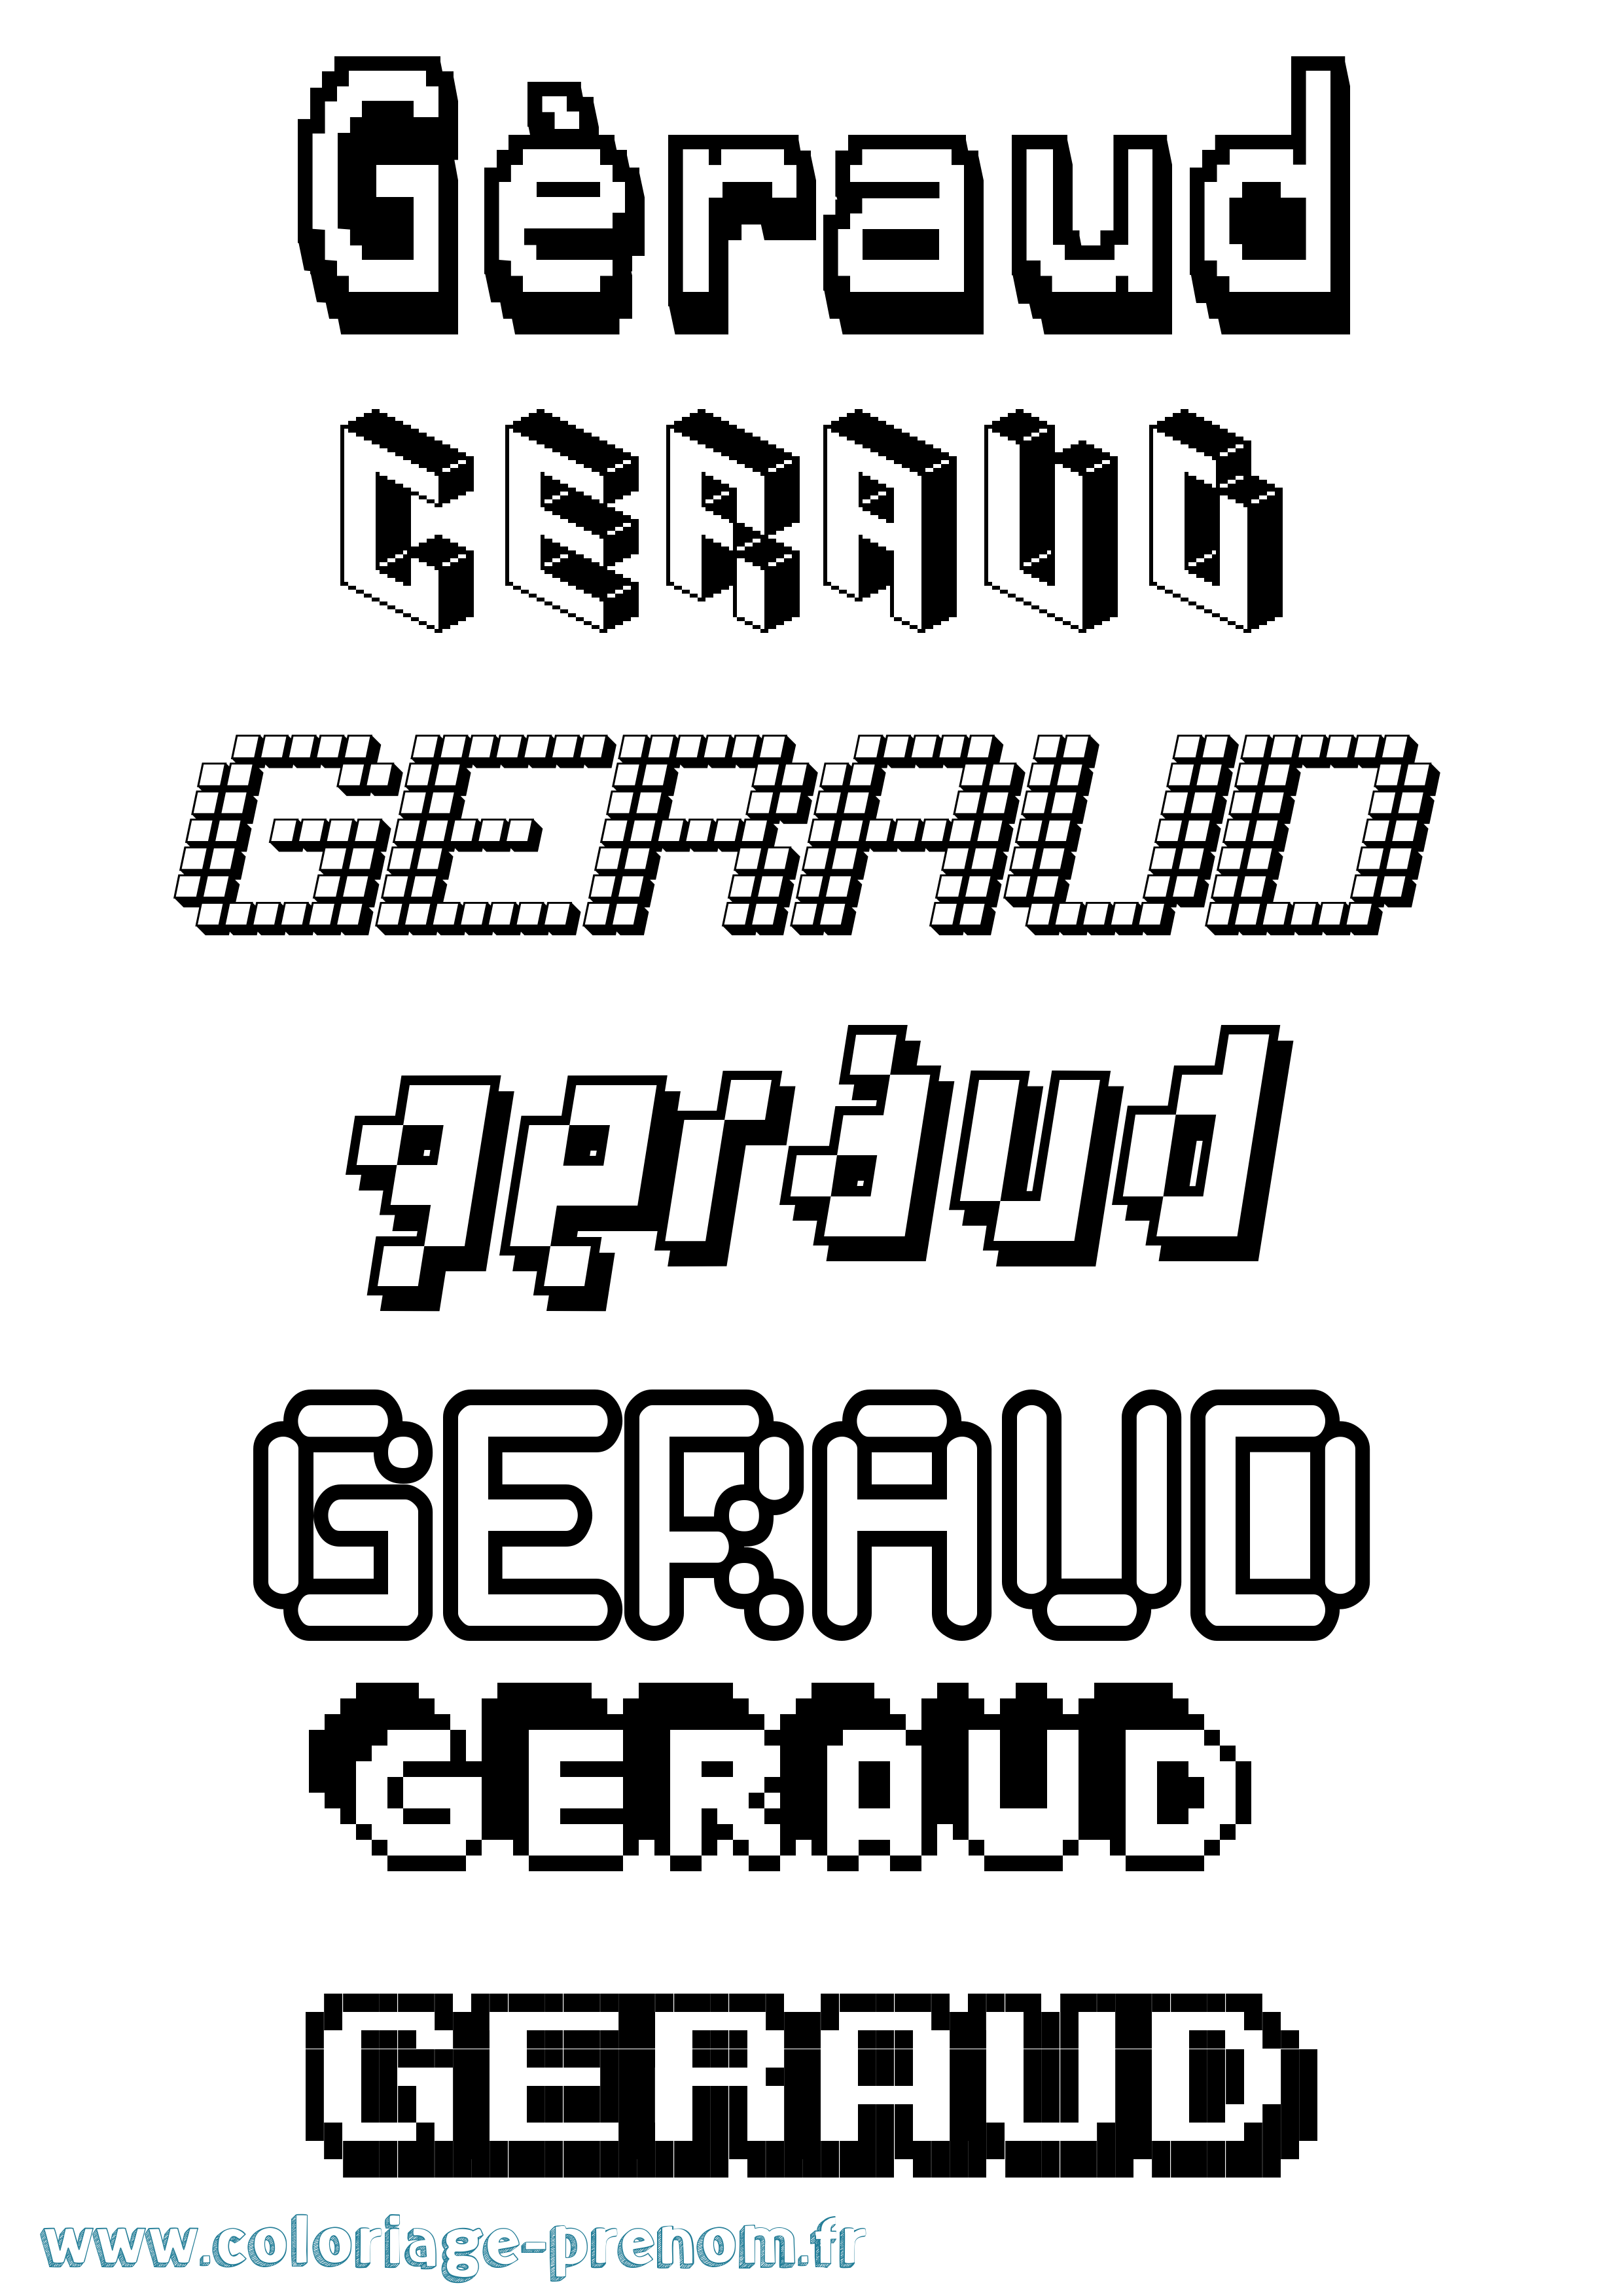 Coloriage prénom Géraud Pixel